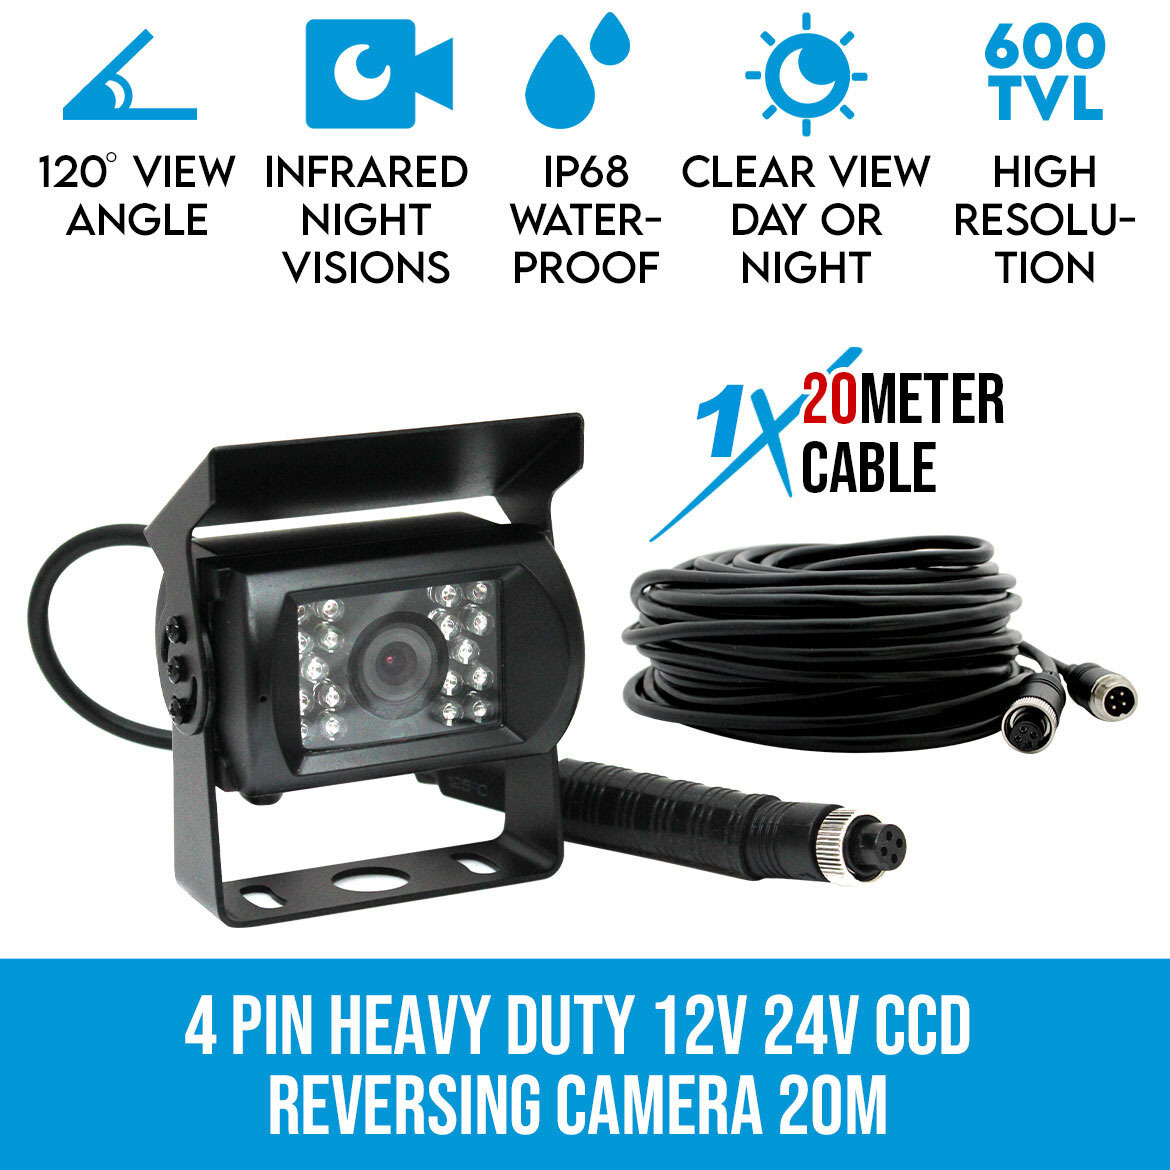 5M 4 PIN Heavy Duty 12V 24V CCD IR Night Vision Colour Reverse Rear View Camera 